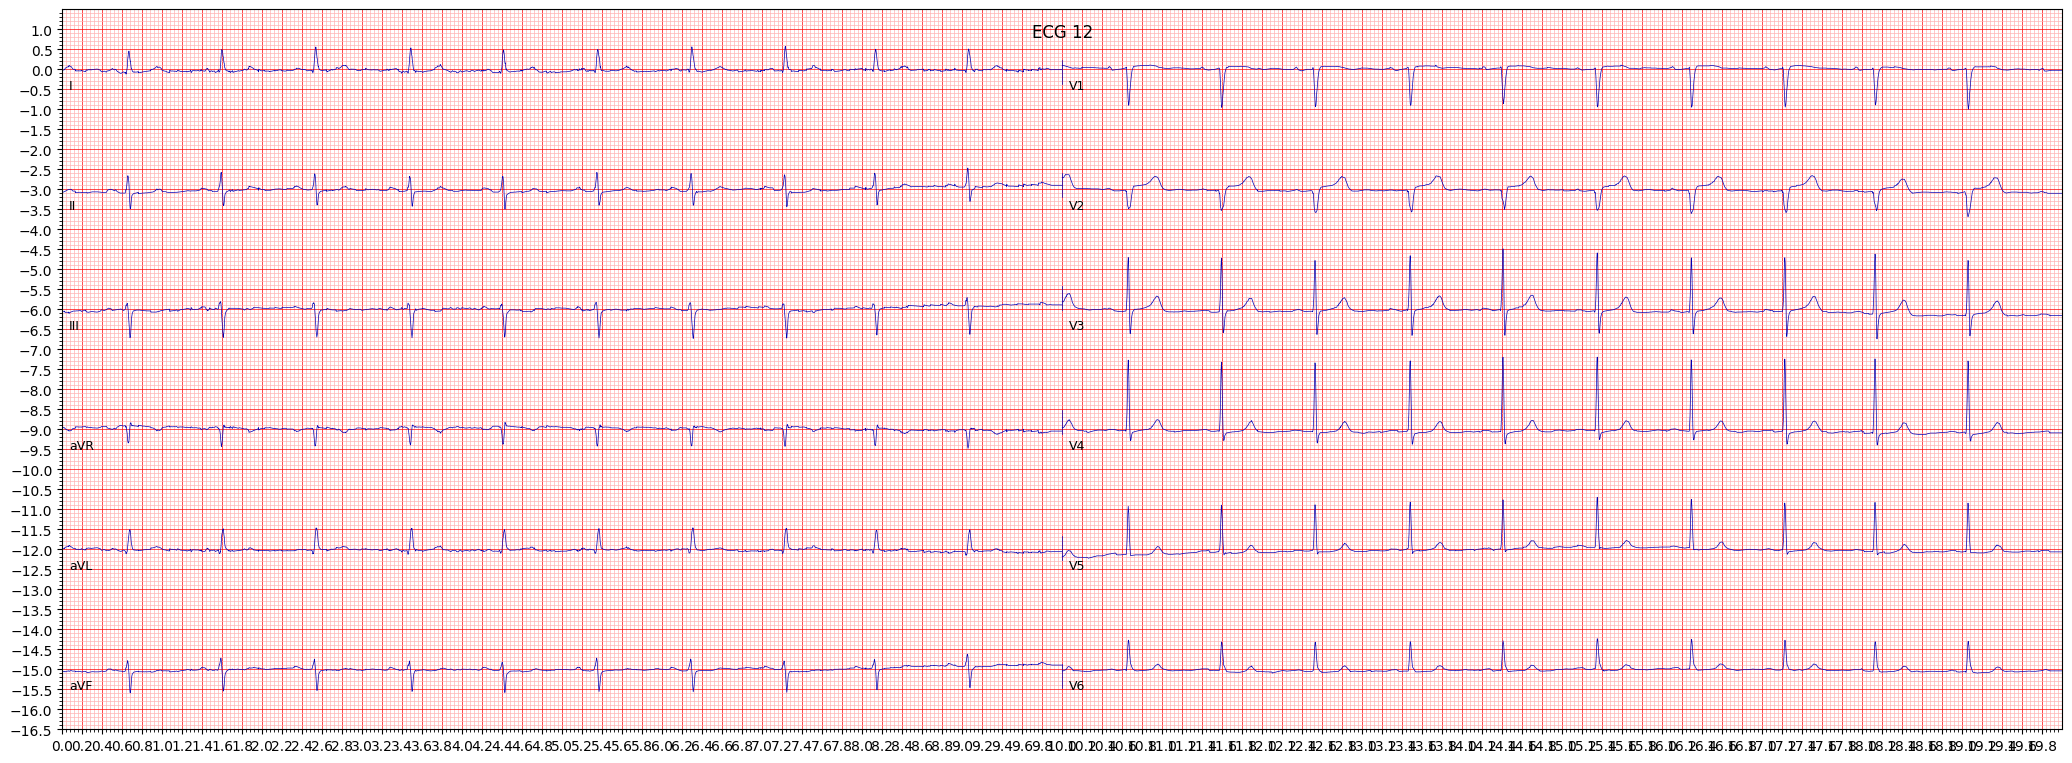 anterior myocardial infarction (AMI) example 15319